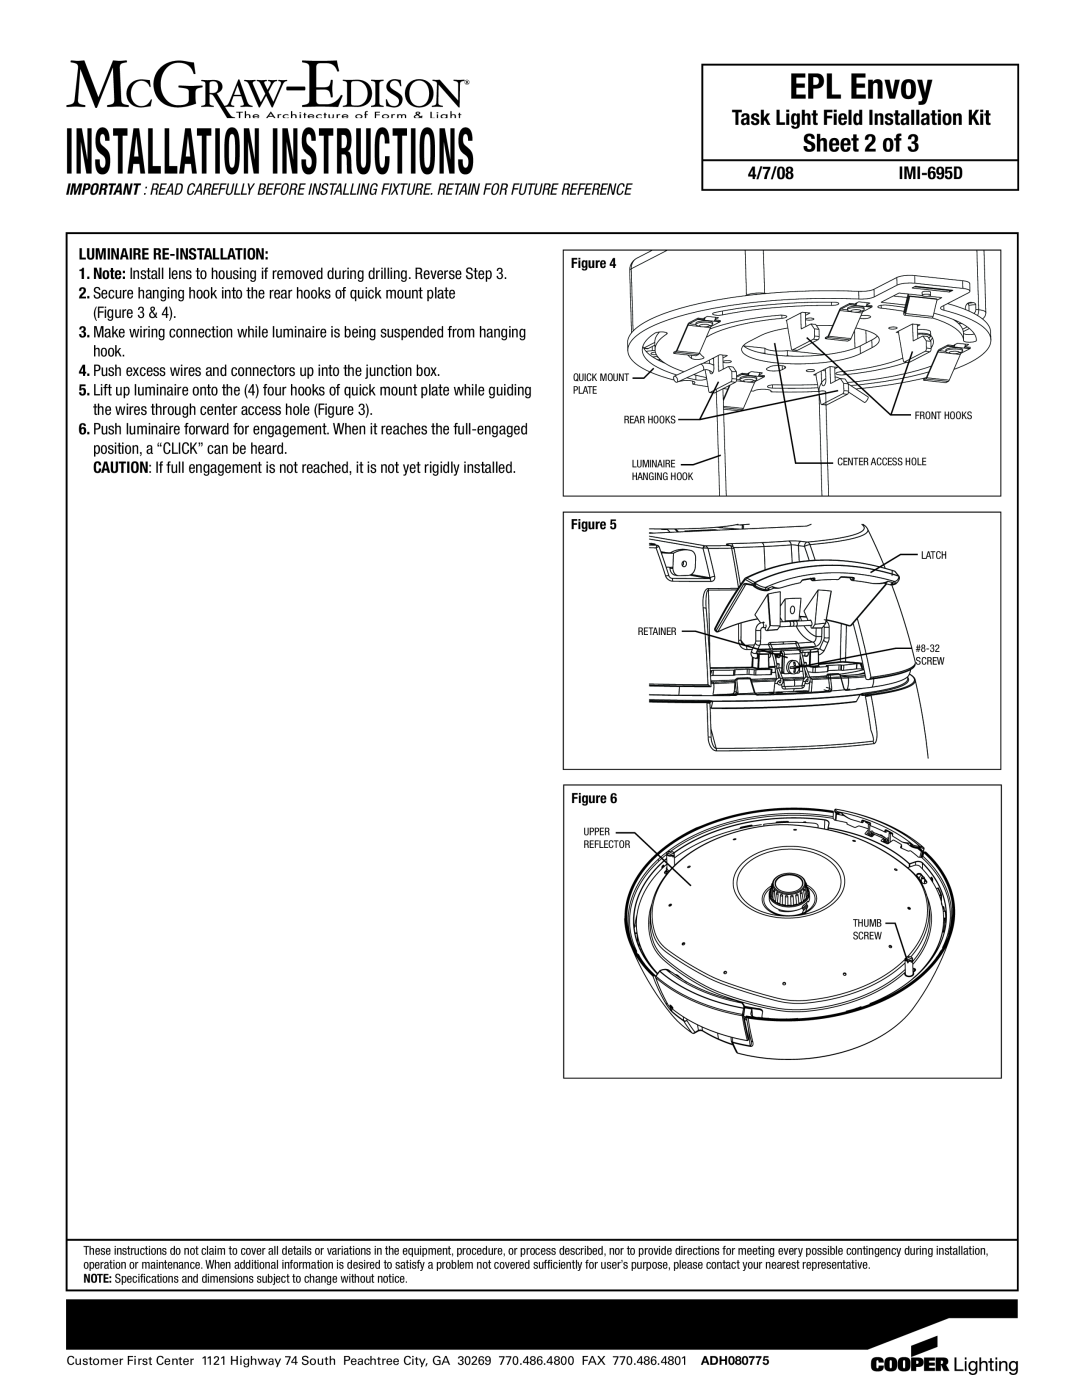 Cooper Lighting IMI-6950 dimensions Sheet 2 of, Installation Instructions, EPL Envoy, Task Light Field Installation Kit 